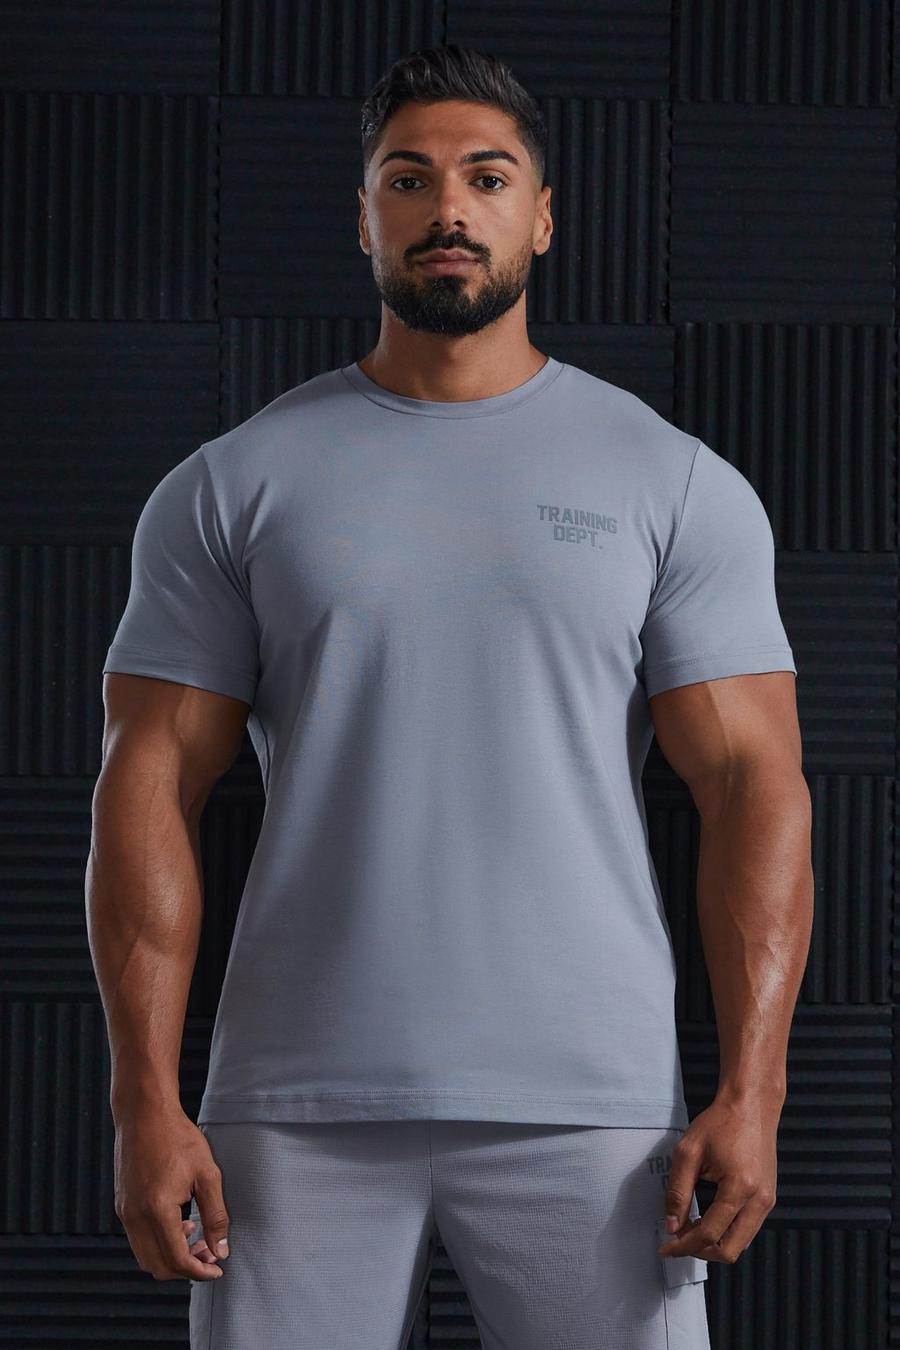 Light grey Active Training Dept Slim fit t-shirt